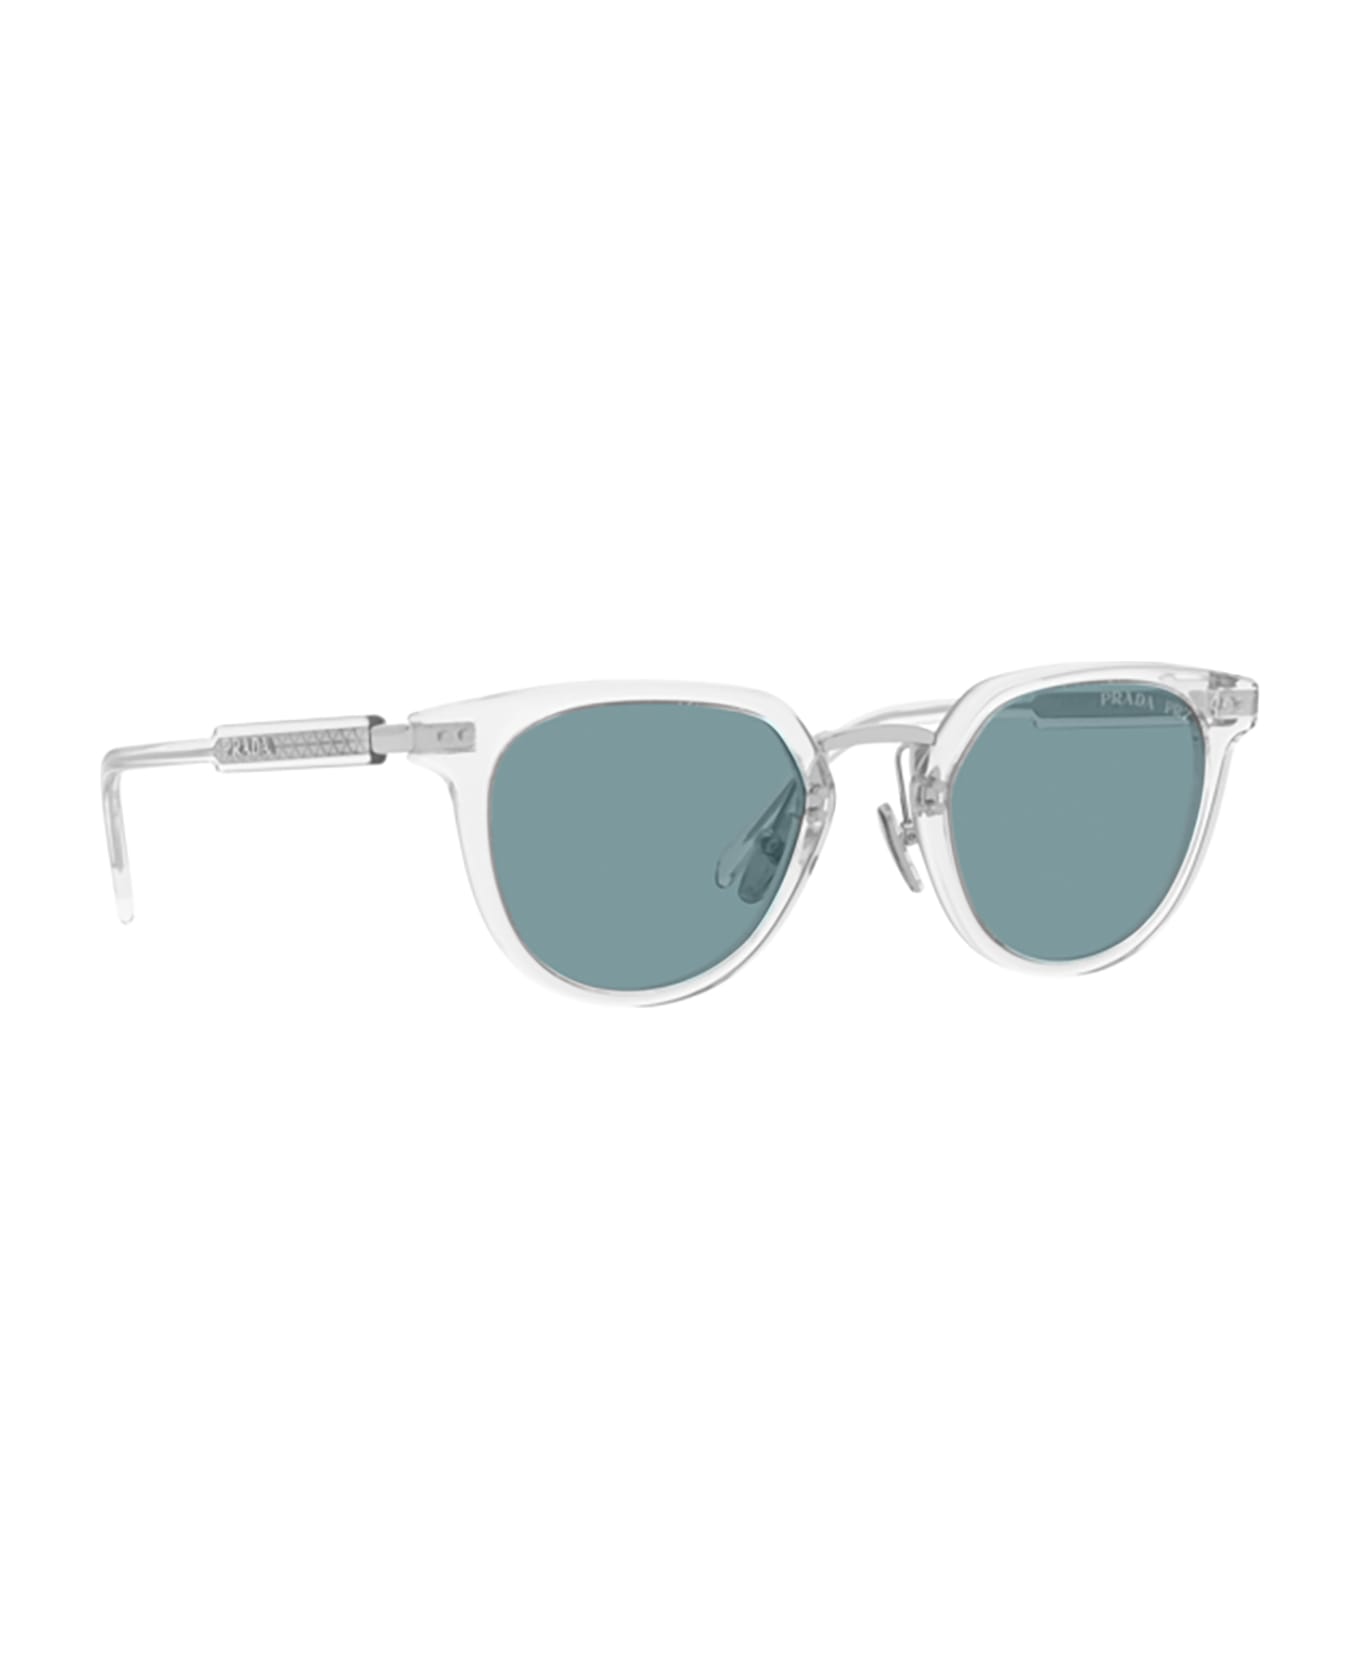 Prada Eyewear Pr 17ys Crystal Sunglasses - Crystal